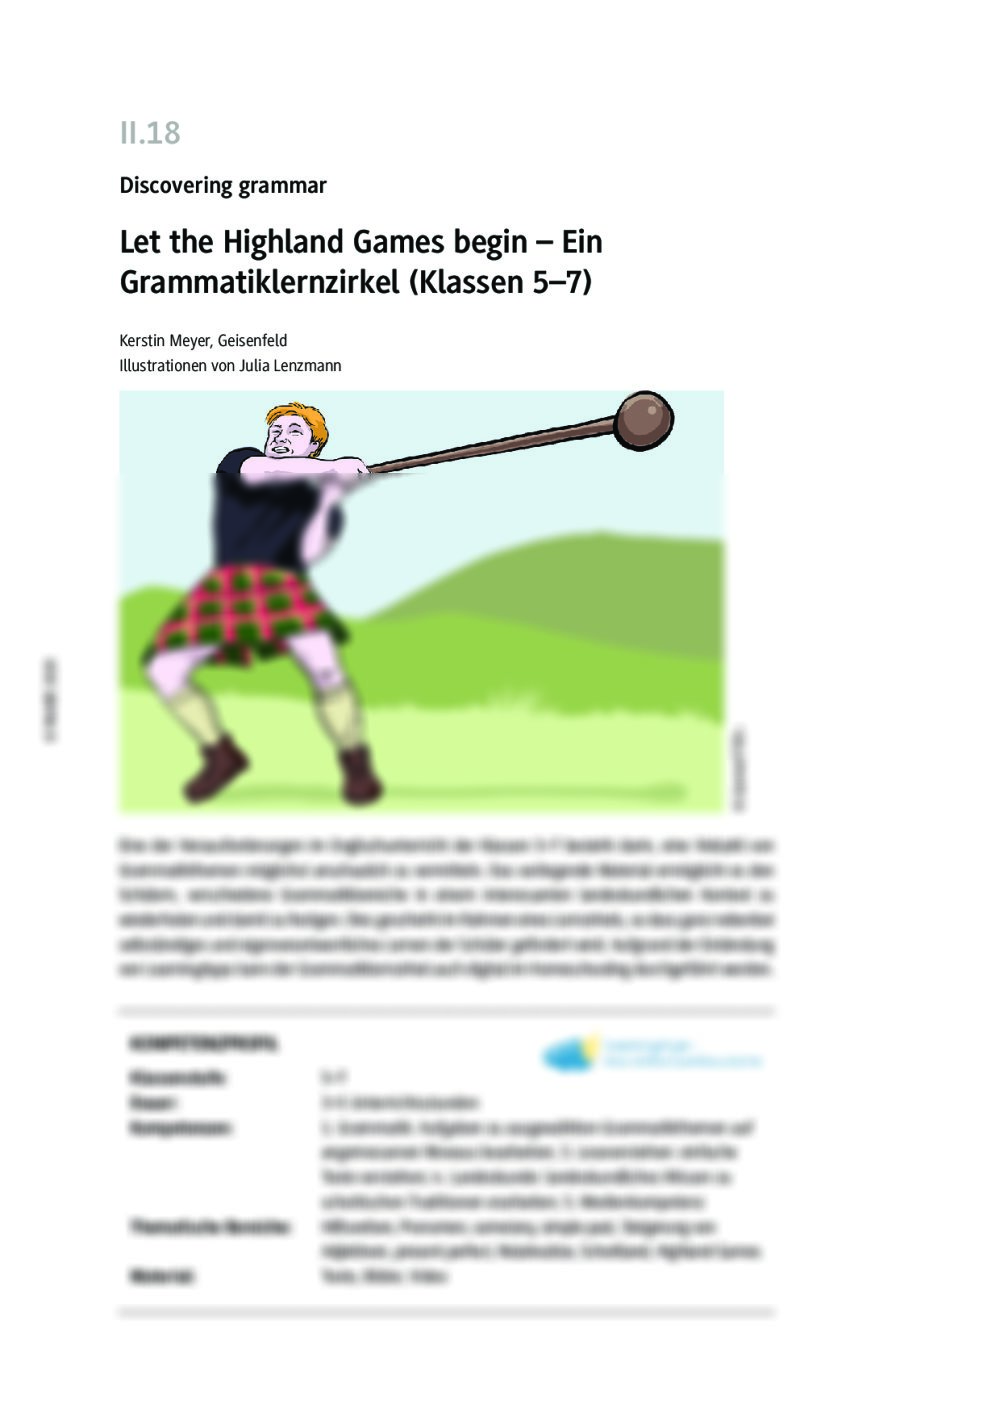 Let the Highland Games begin - Seite 1